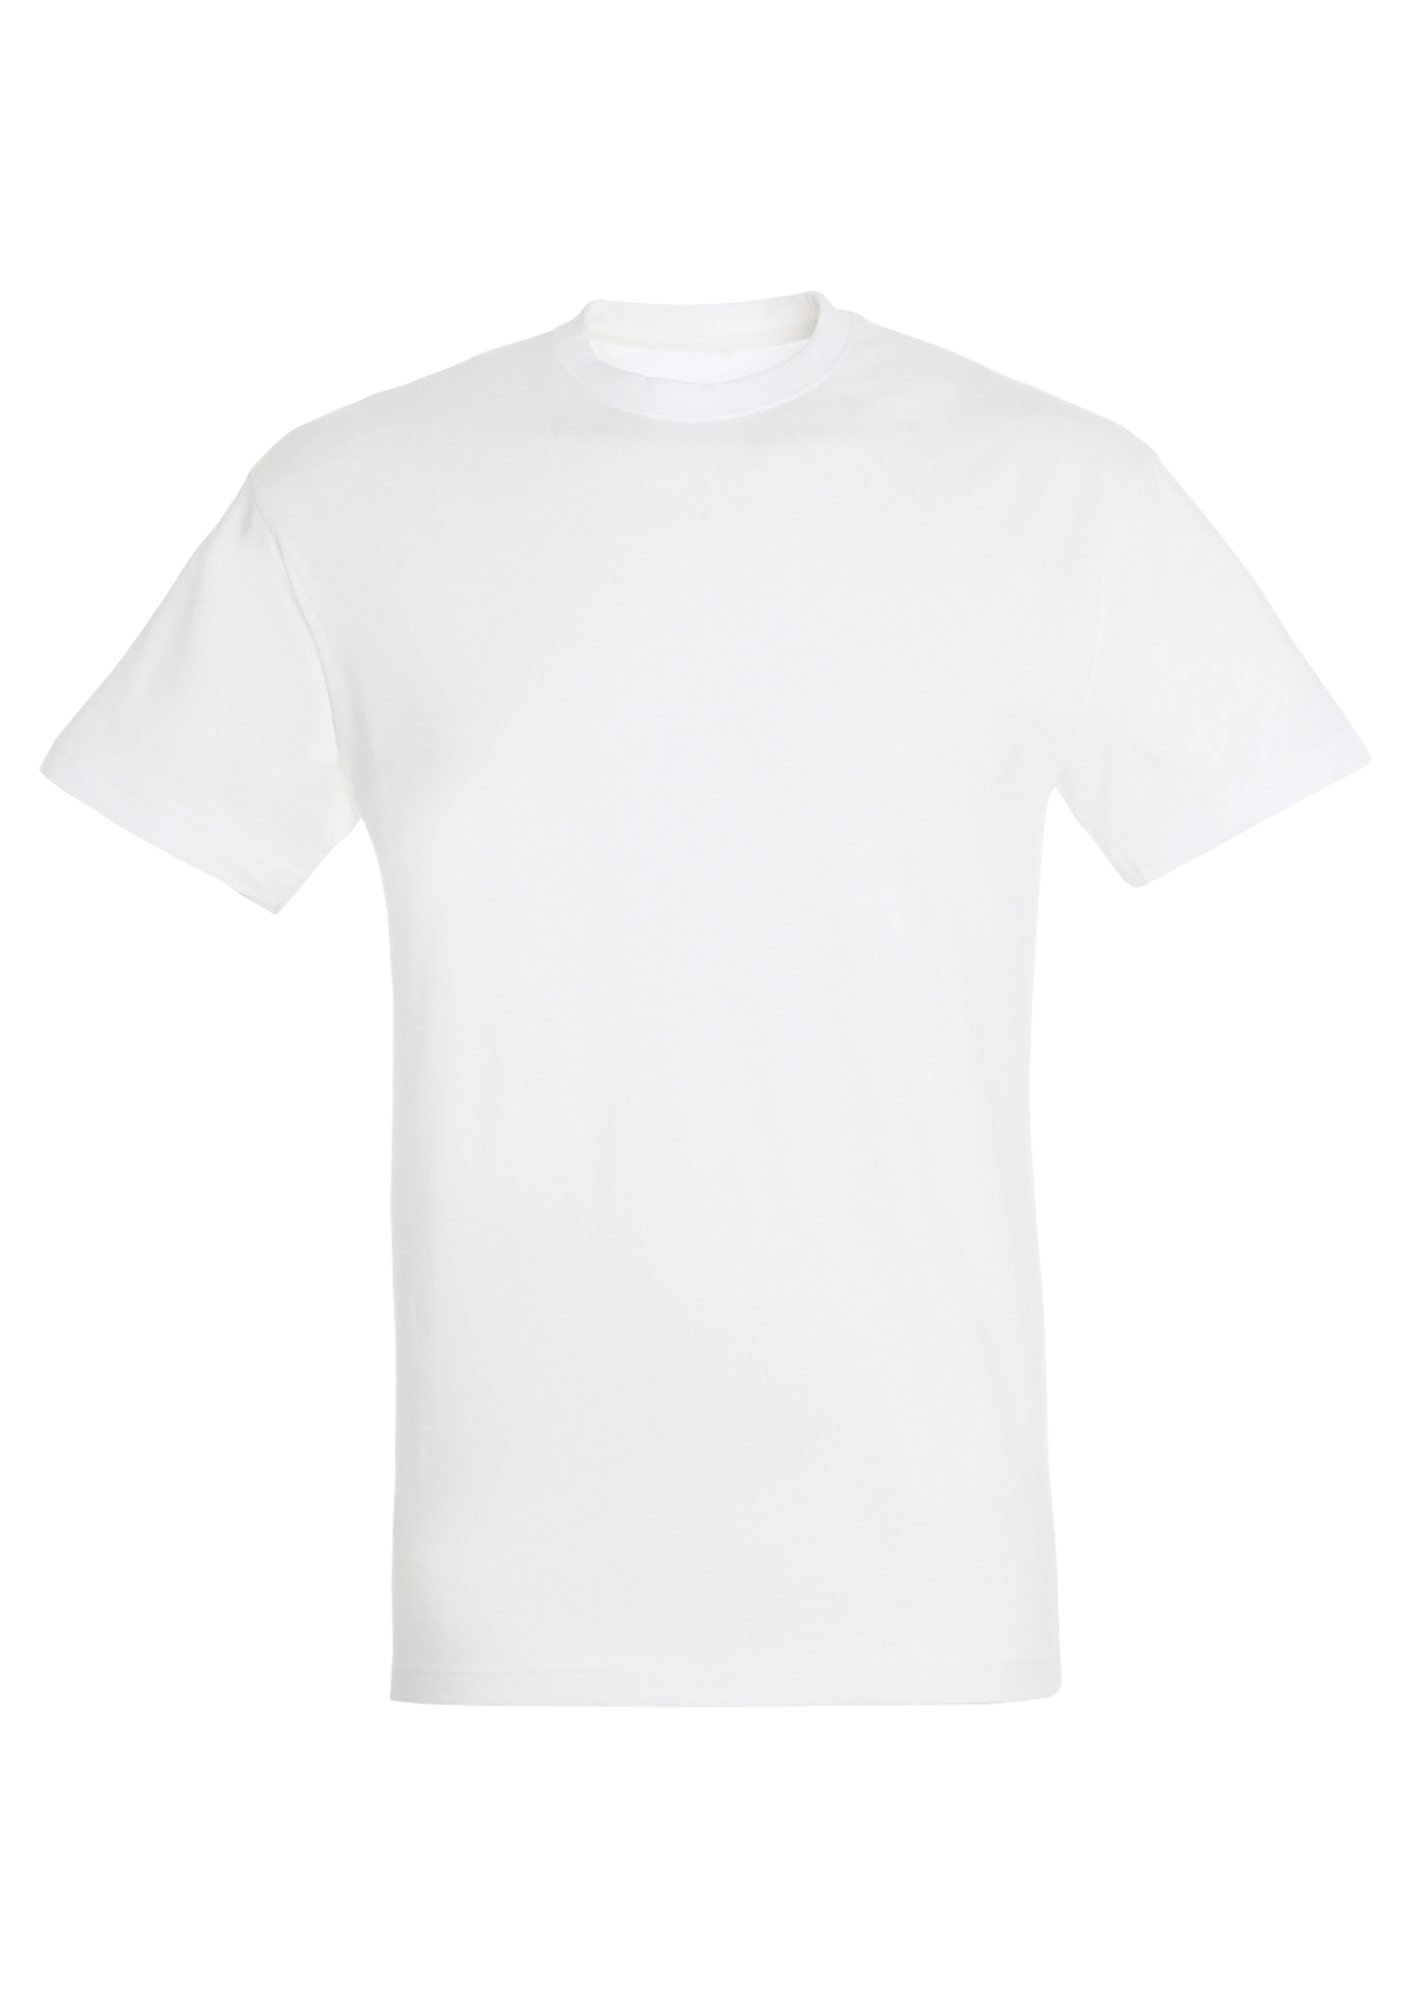 T-shirt Adulte Navy Helmet Blanc - REGENT-ADULTE-FACEBLANC_c933d1c0-a488-47cd-99af-b84ec01dc11b